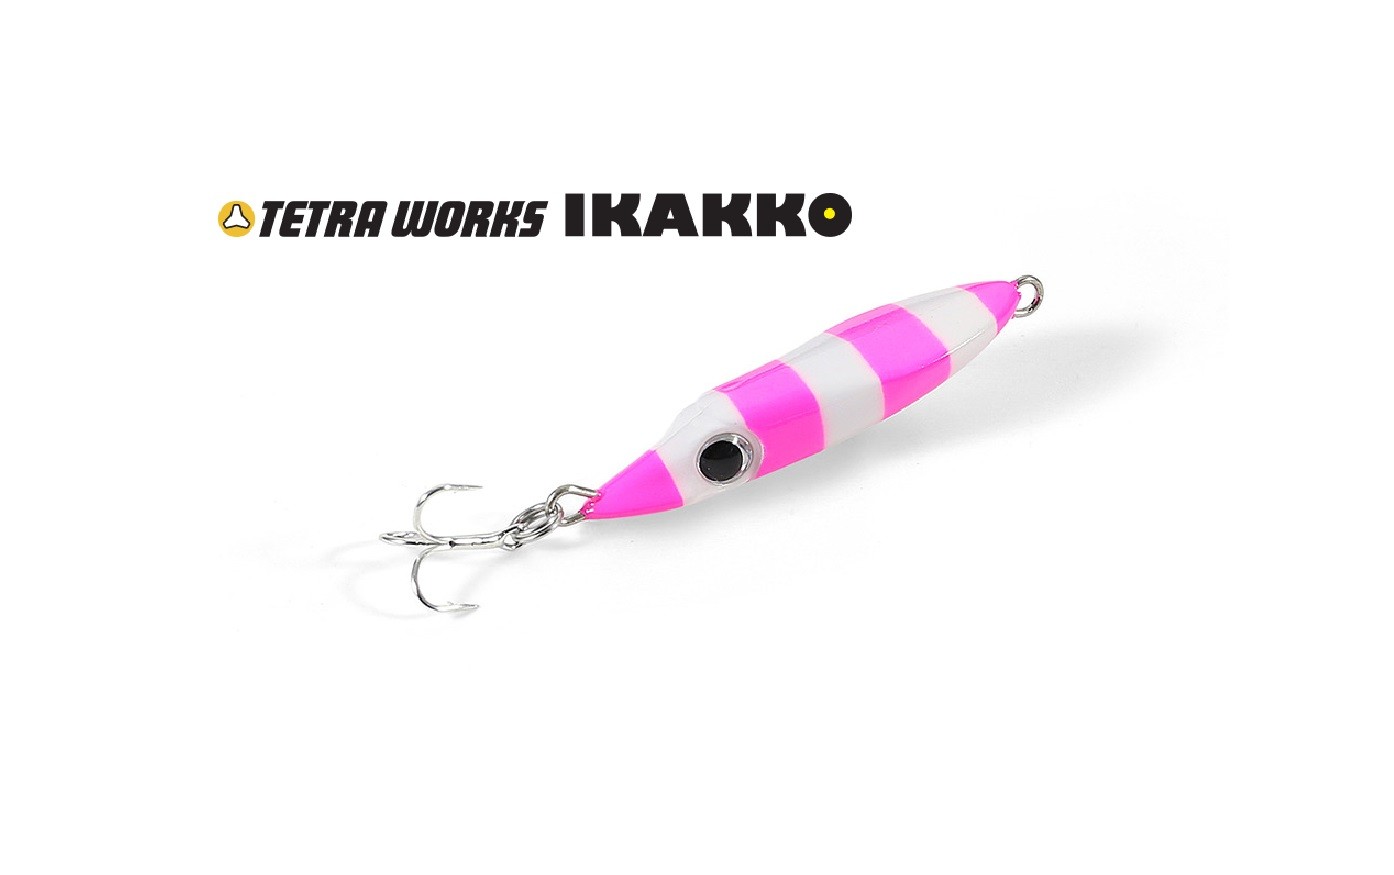 Duo TetraWorks Ikakko